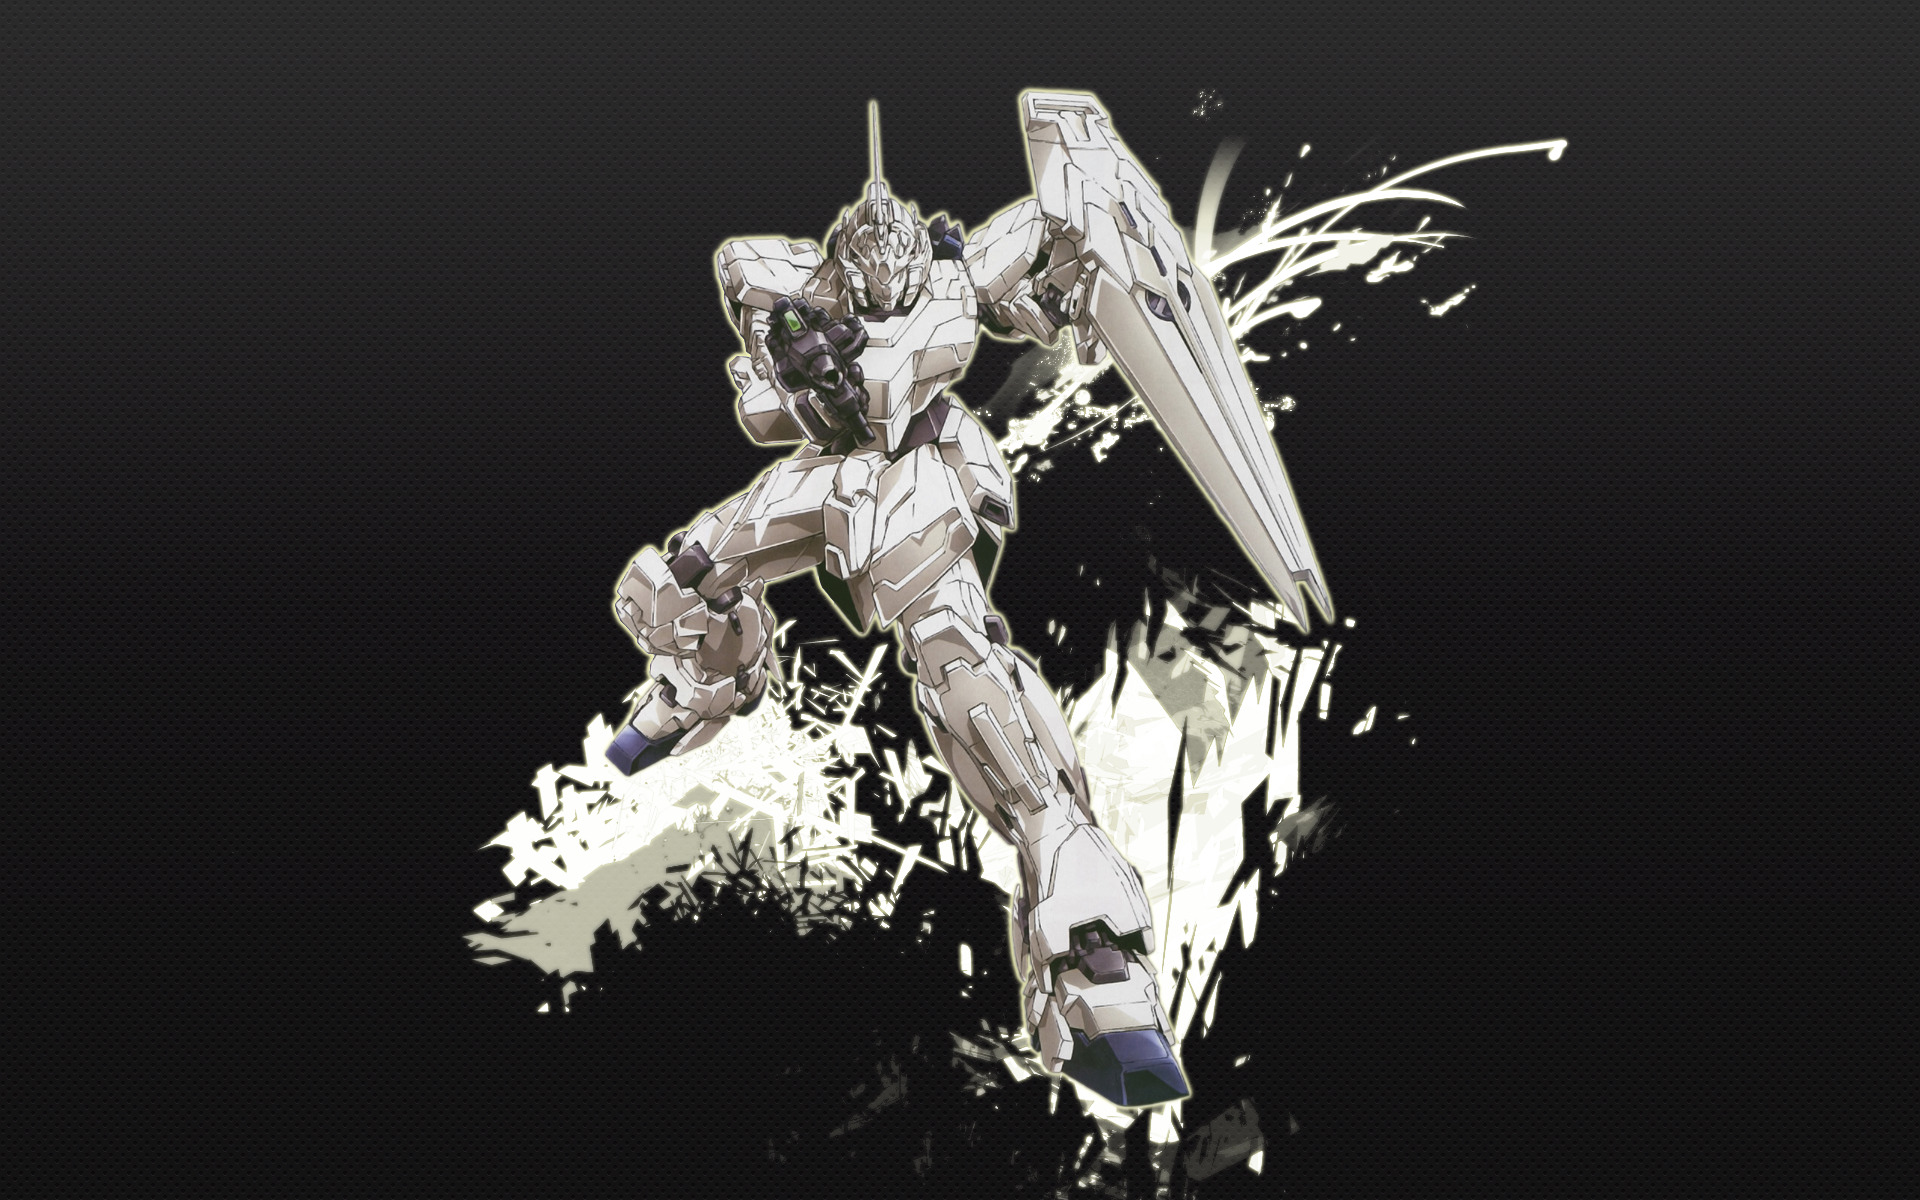 Gundam, Anime, Mobile Suit Gundam Unicorn, RX 0 Unicorn Gundam, Mech Wallpaper